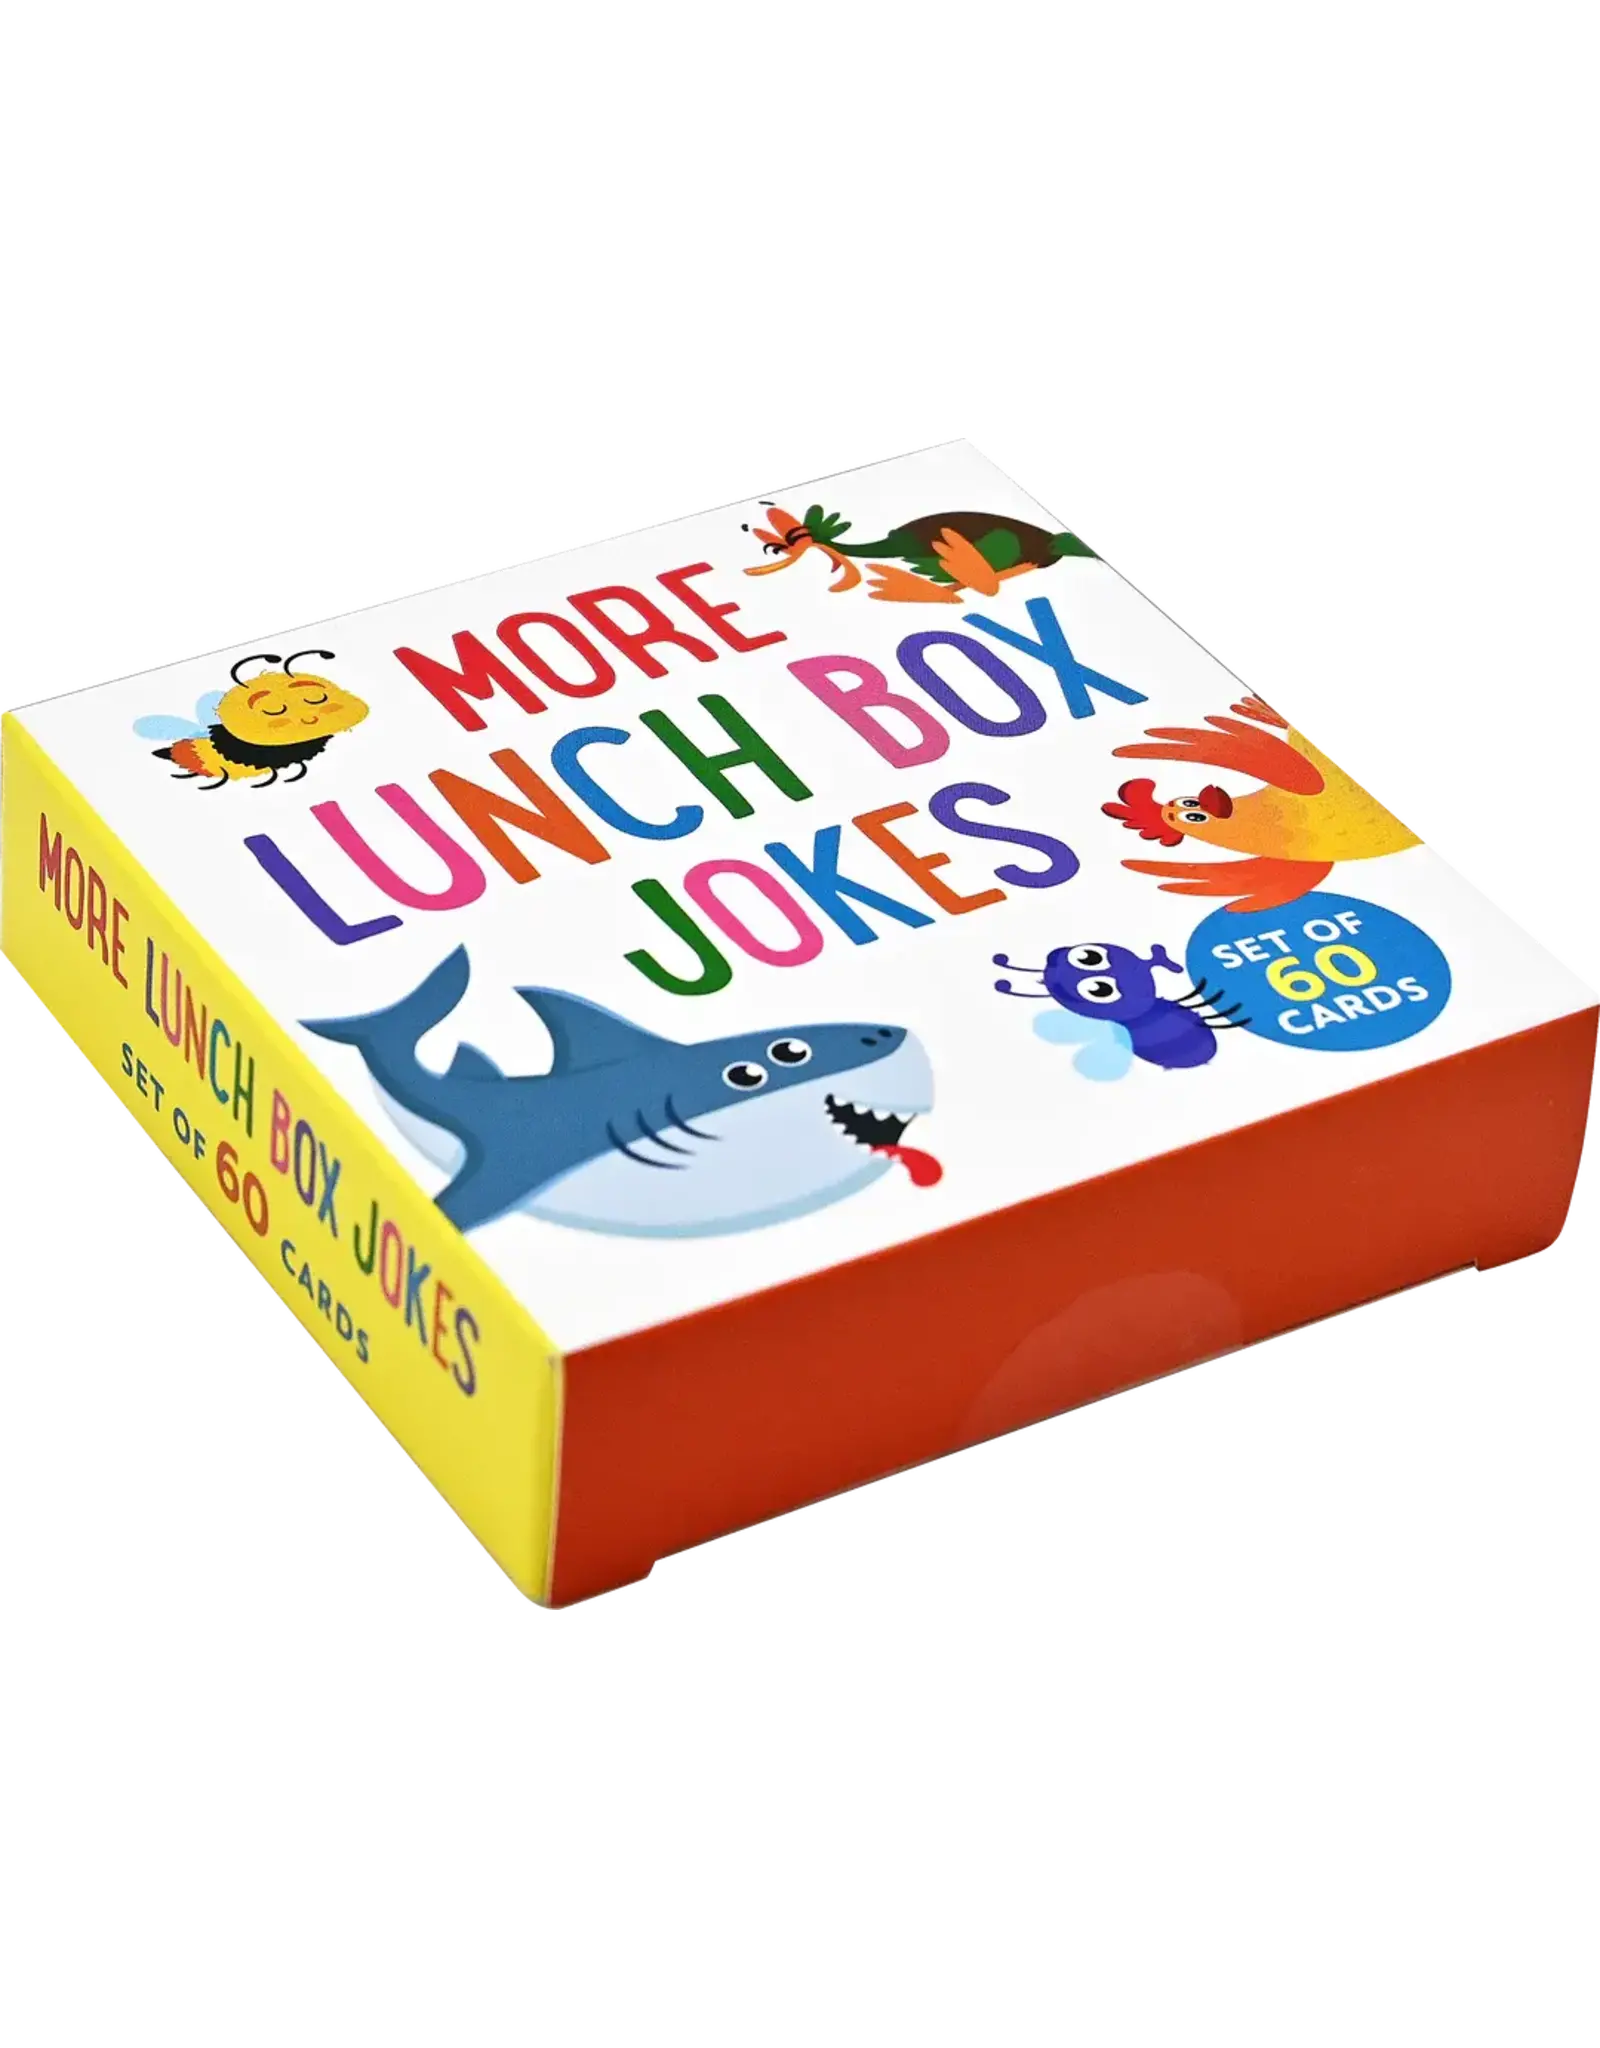 Peter Pauper Press More Lunch Box Jokes Card Deck (Set of 60 cards)